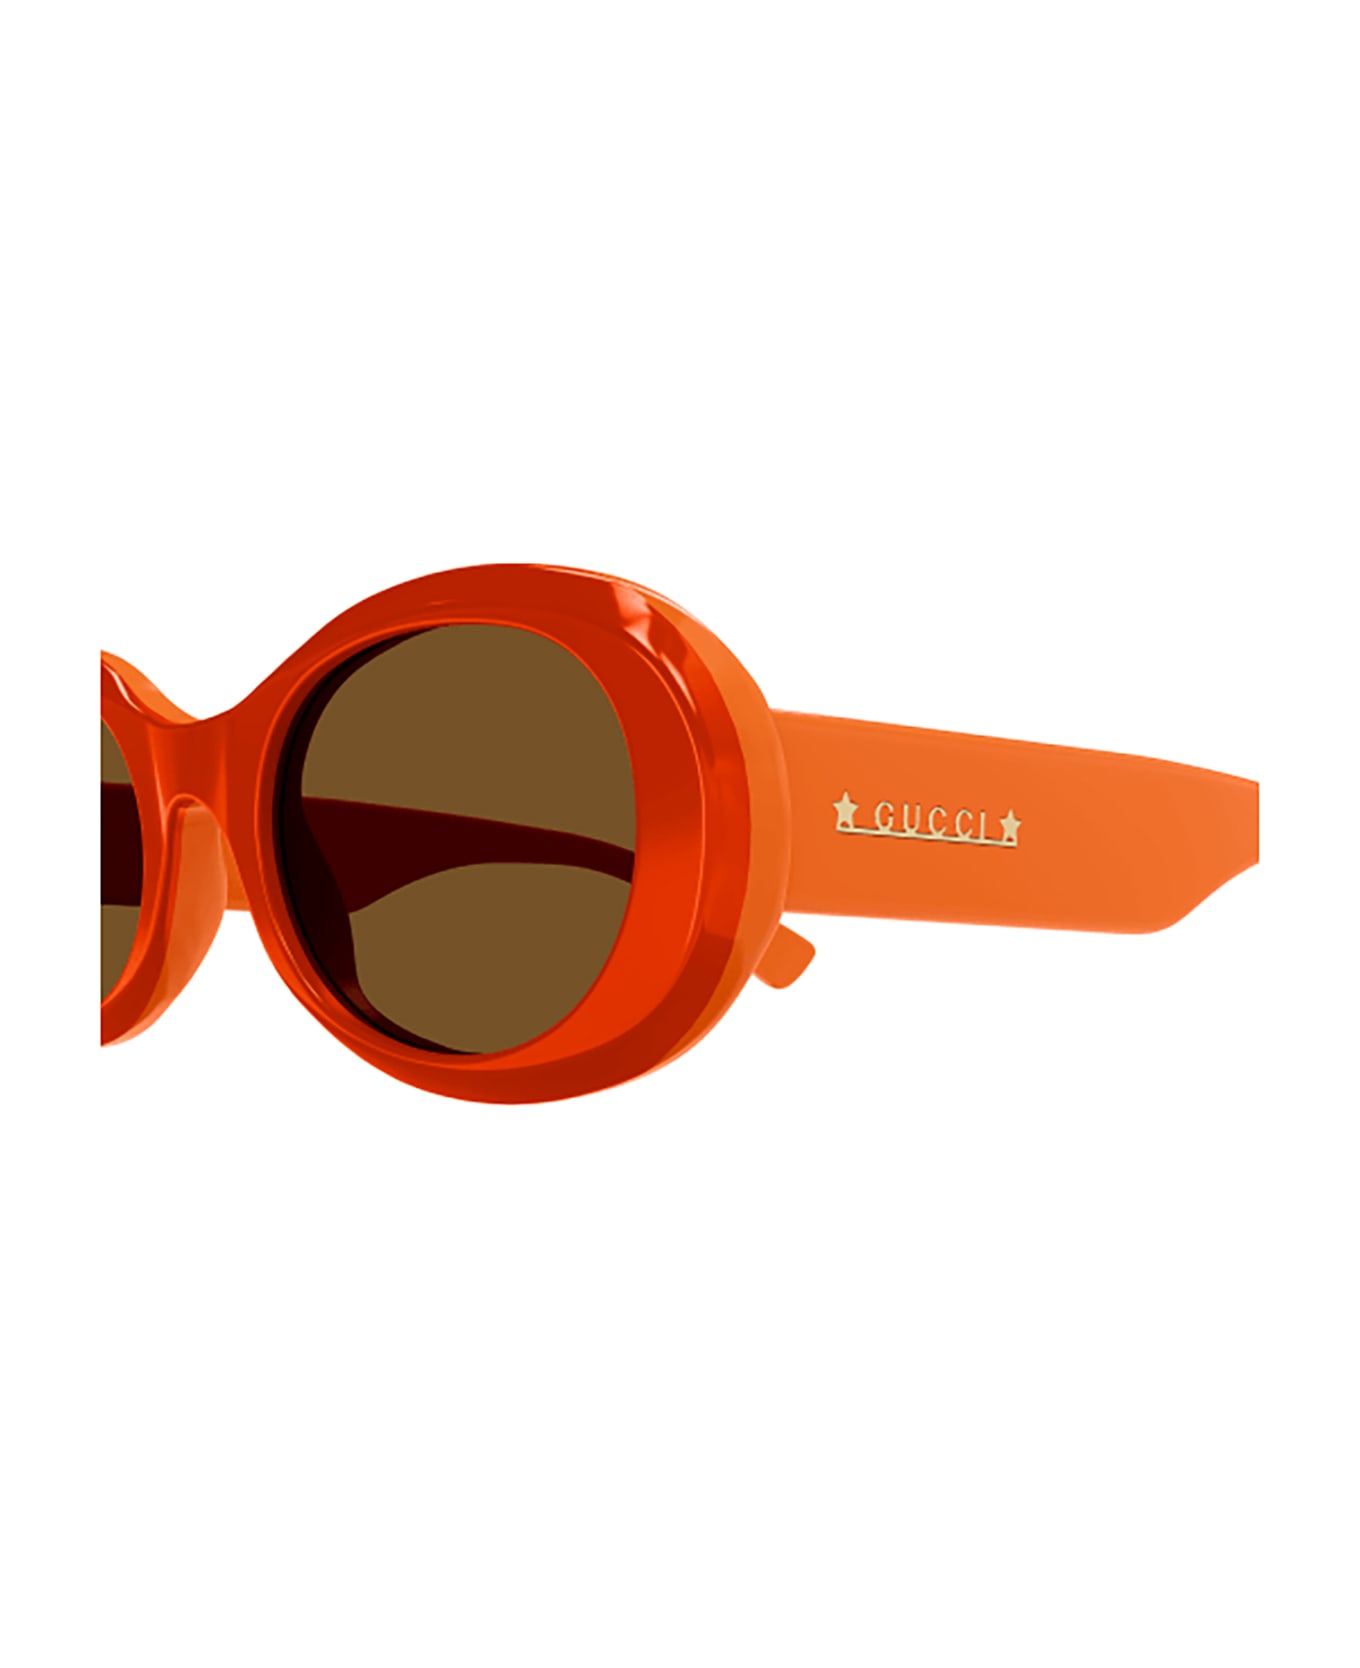 Gucci Eyewear GG1587S Sunglasses brow - goodr devil wears runways sunglasses